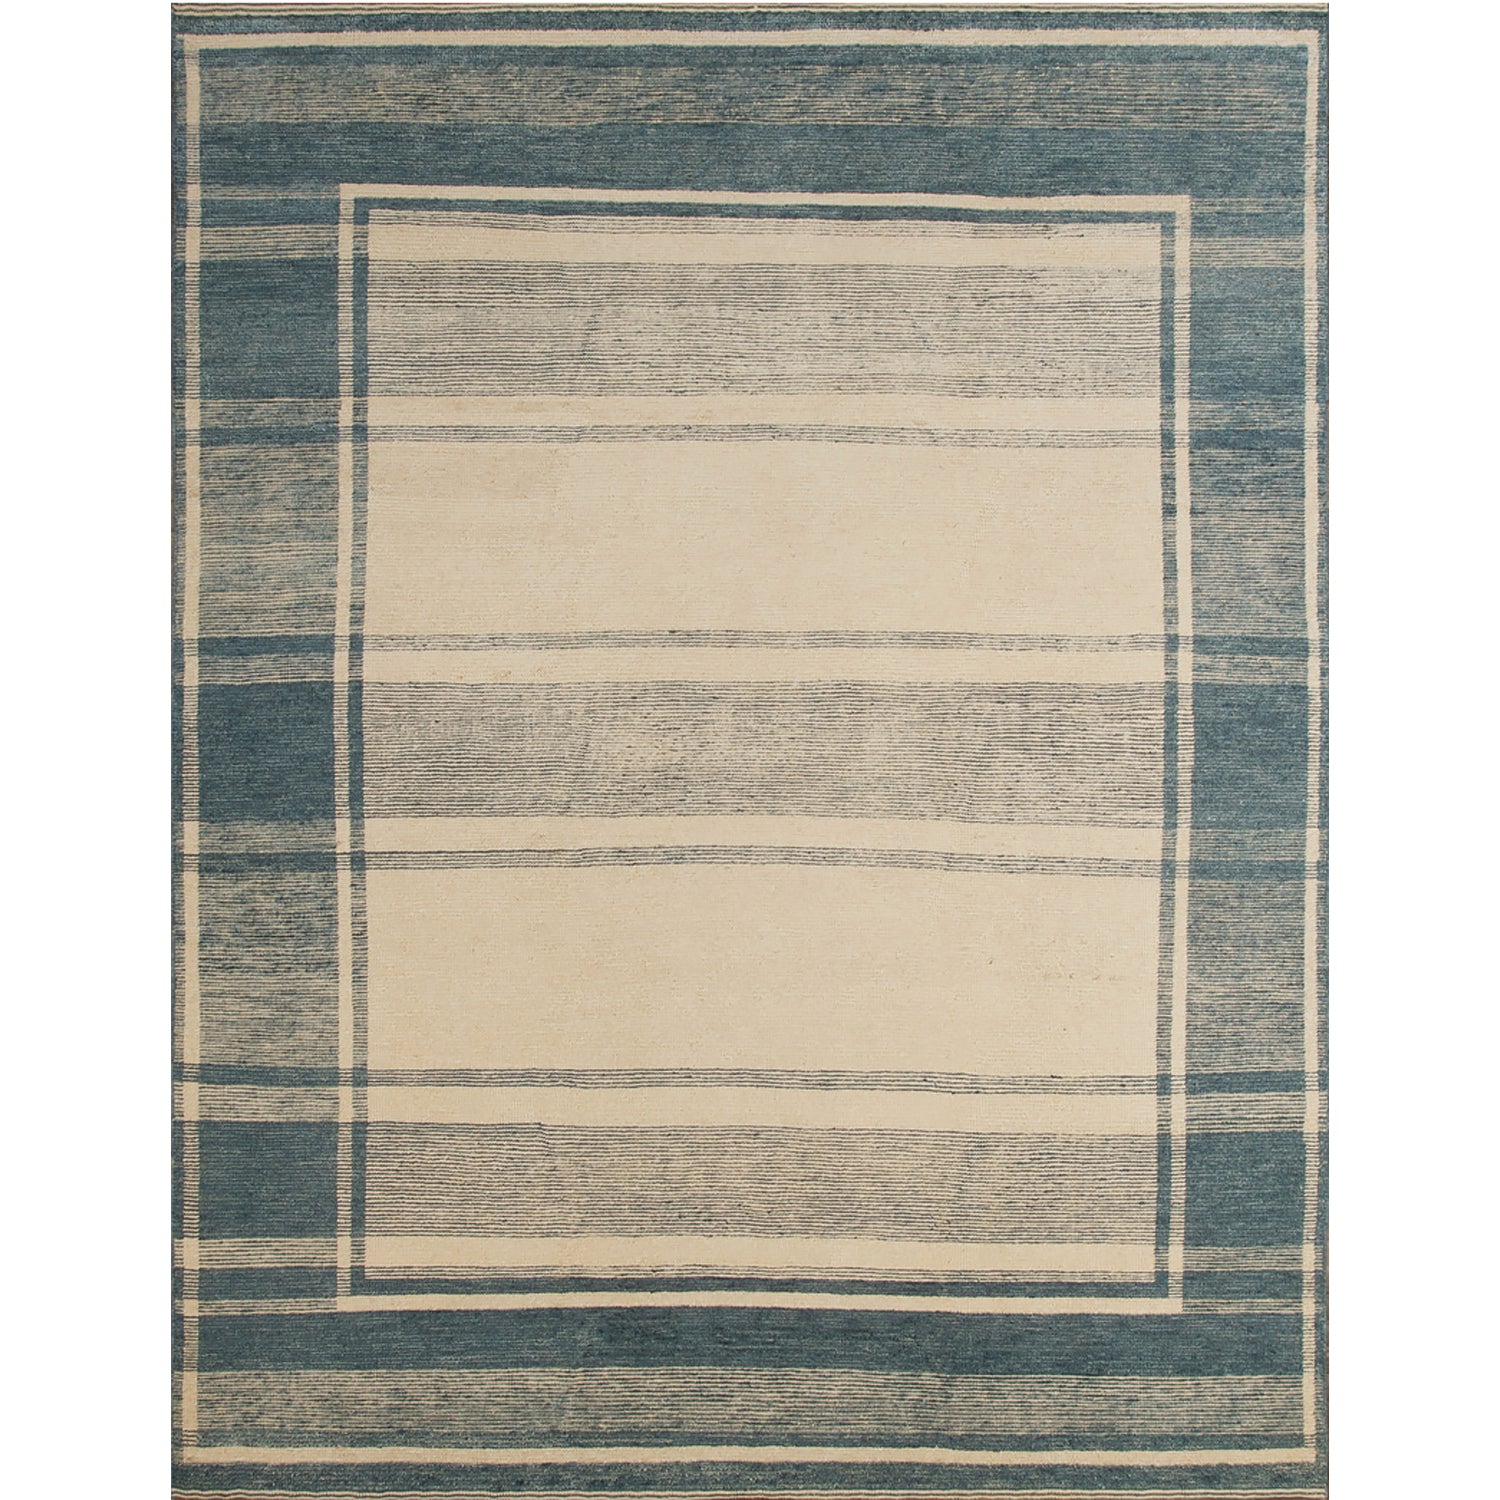 Rectangular rug in a plaid woodgrain pattern in blue-gray on a tan field.